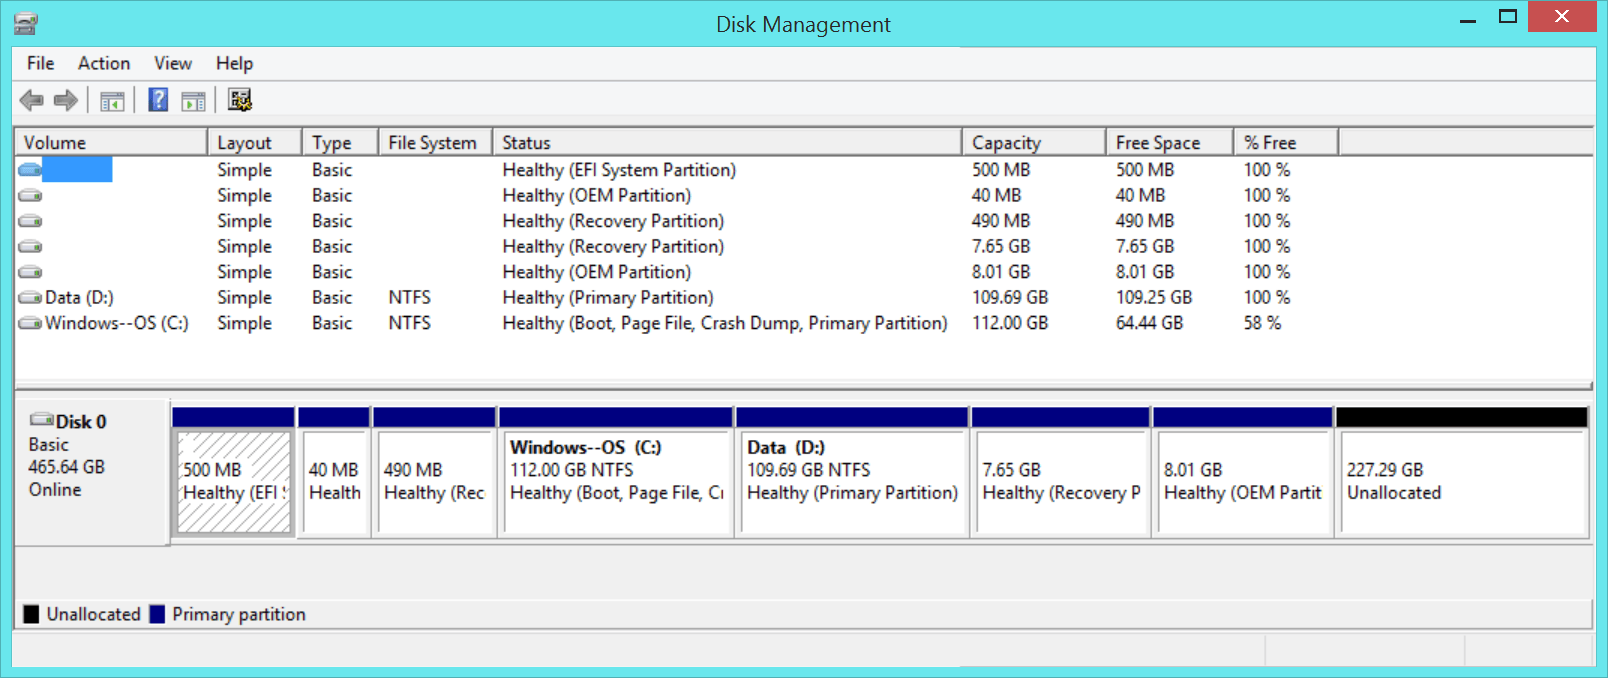 XPS 12 Disk Mangement Screenshot.png